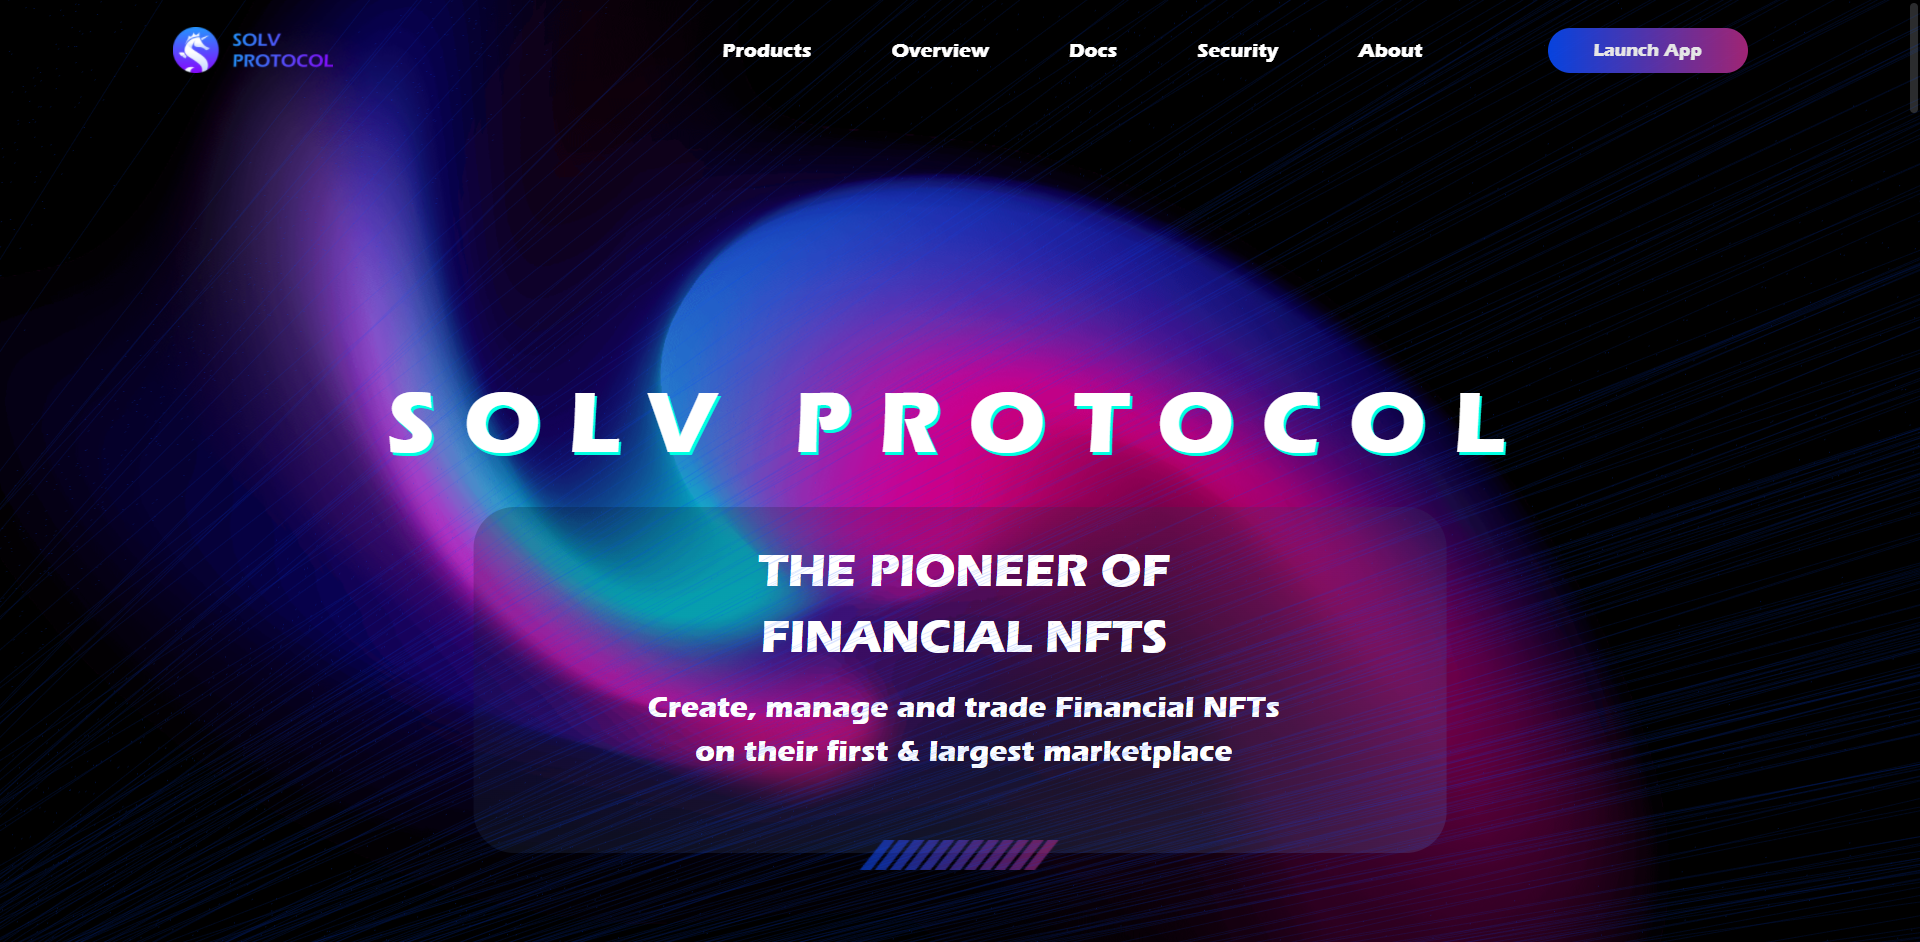 Solv Protocol introduces Convertible Vouchers